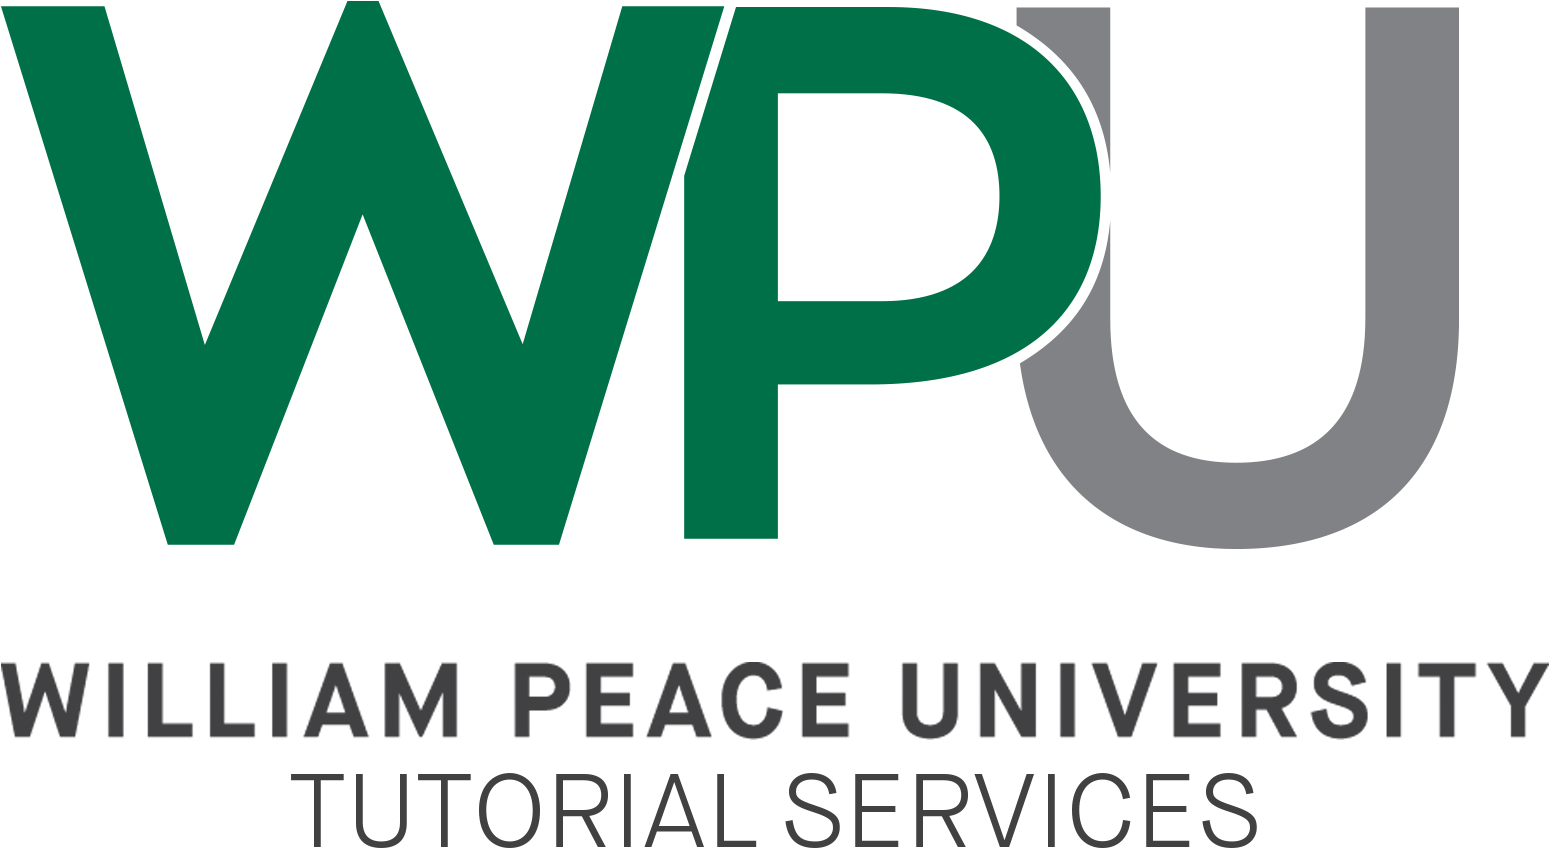 Wpu Tutorial Services New Full Logo 2017 - William Peace University (1900x1044)